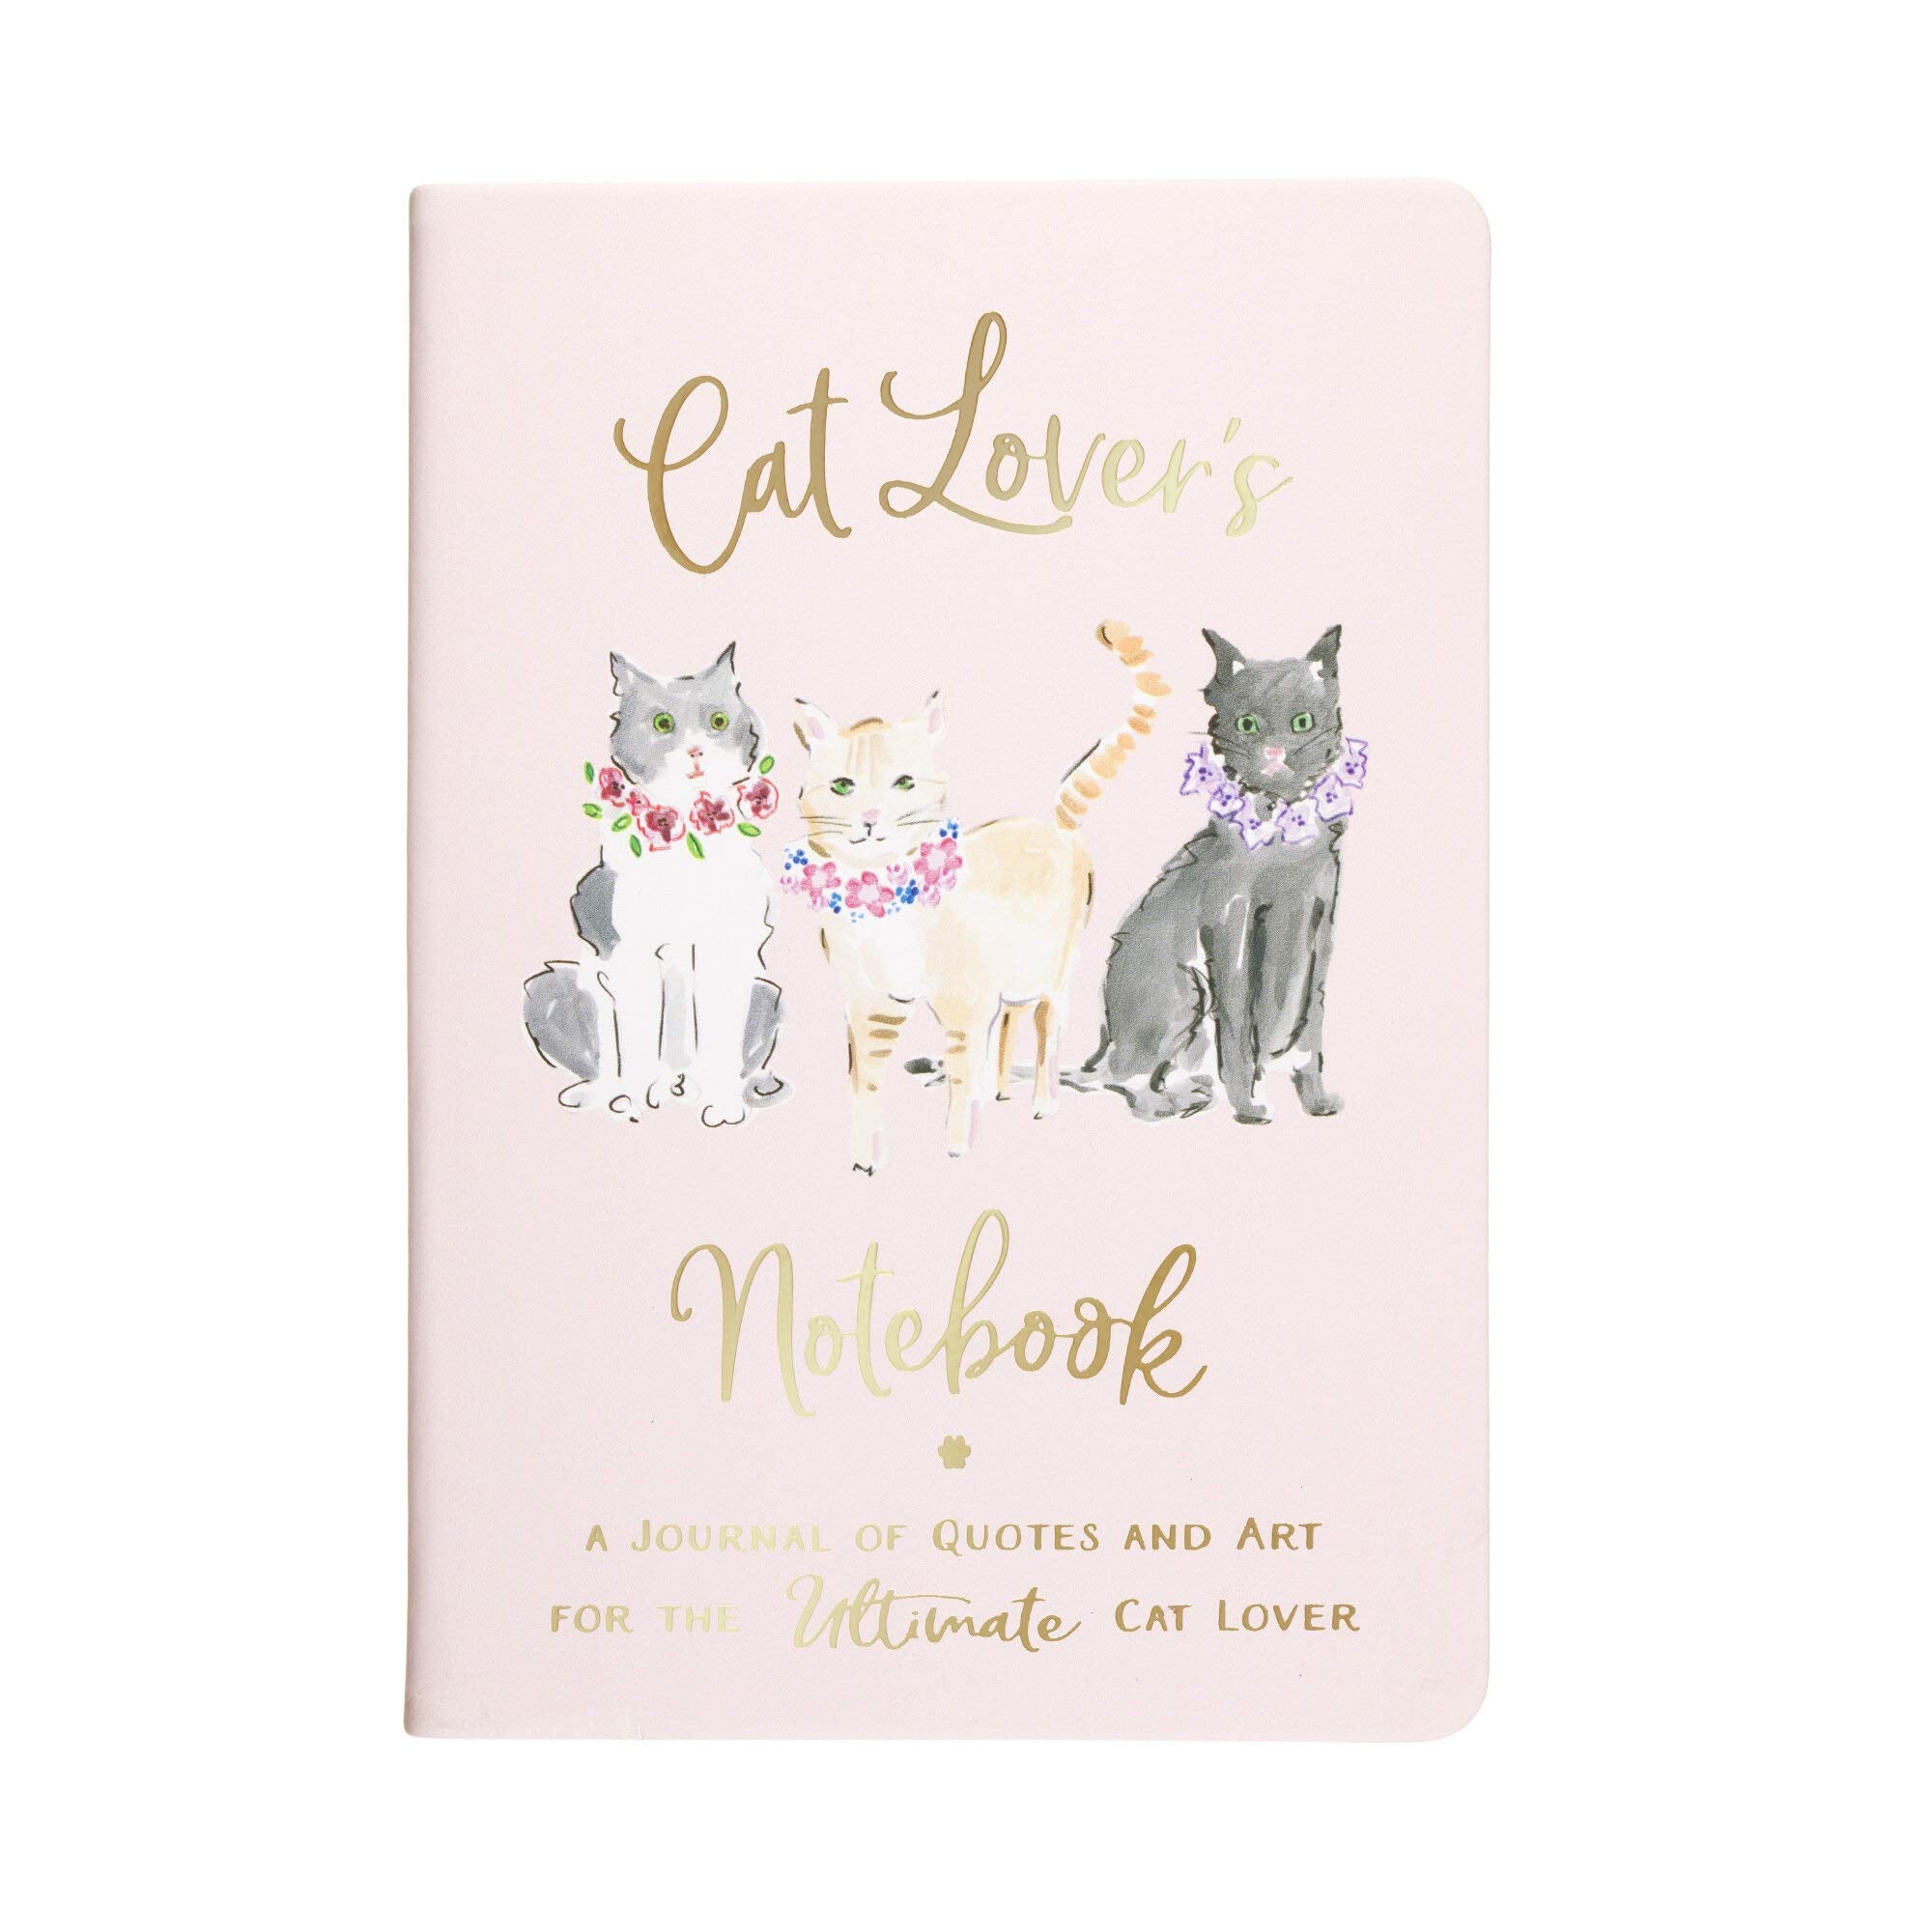 Eccolo World Traveler Cat Lover's Notebook